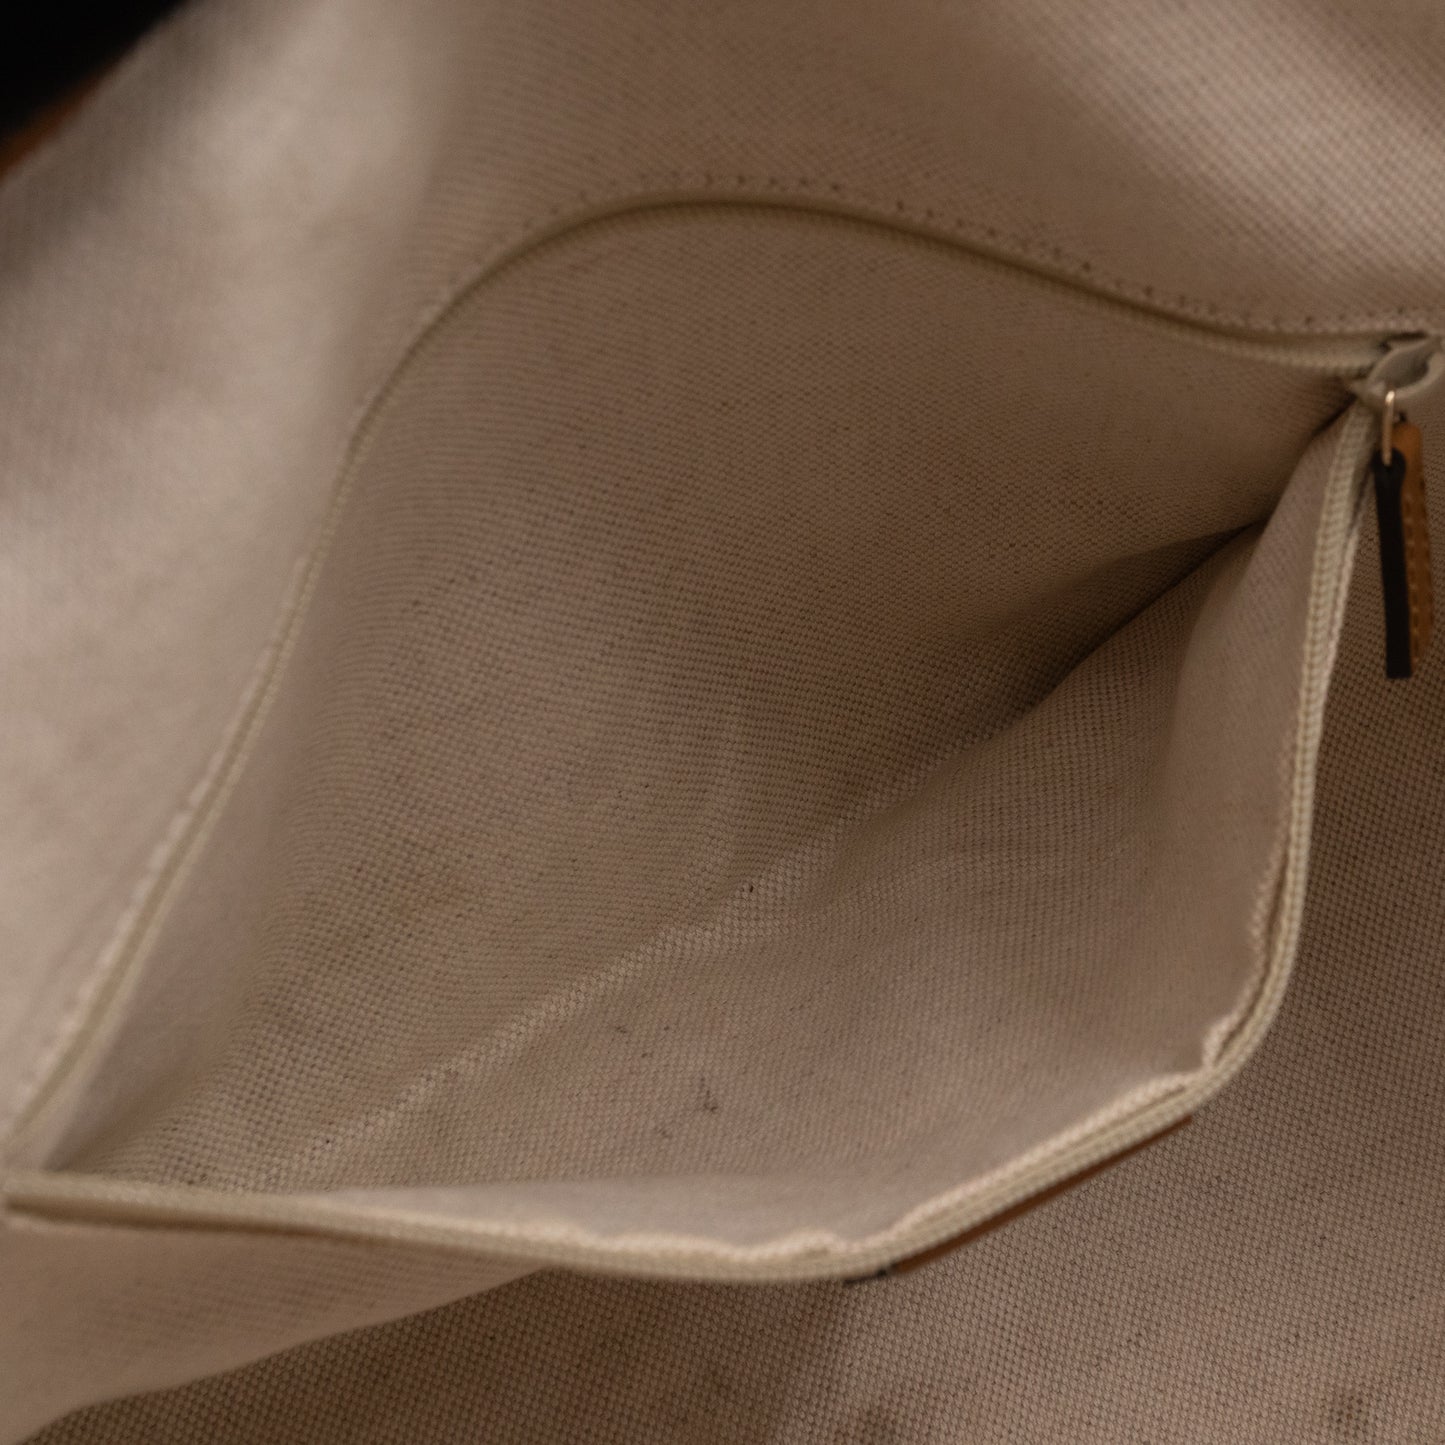 Sukey Boston Shoulder Bag Denim Brown Leather